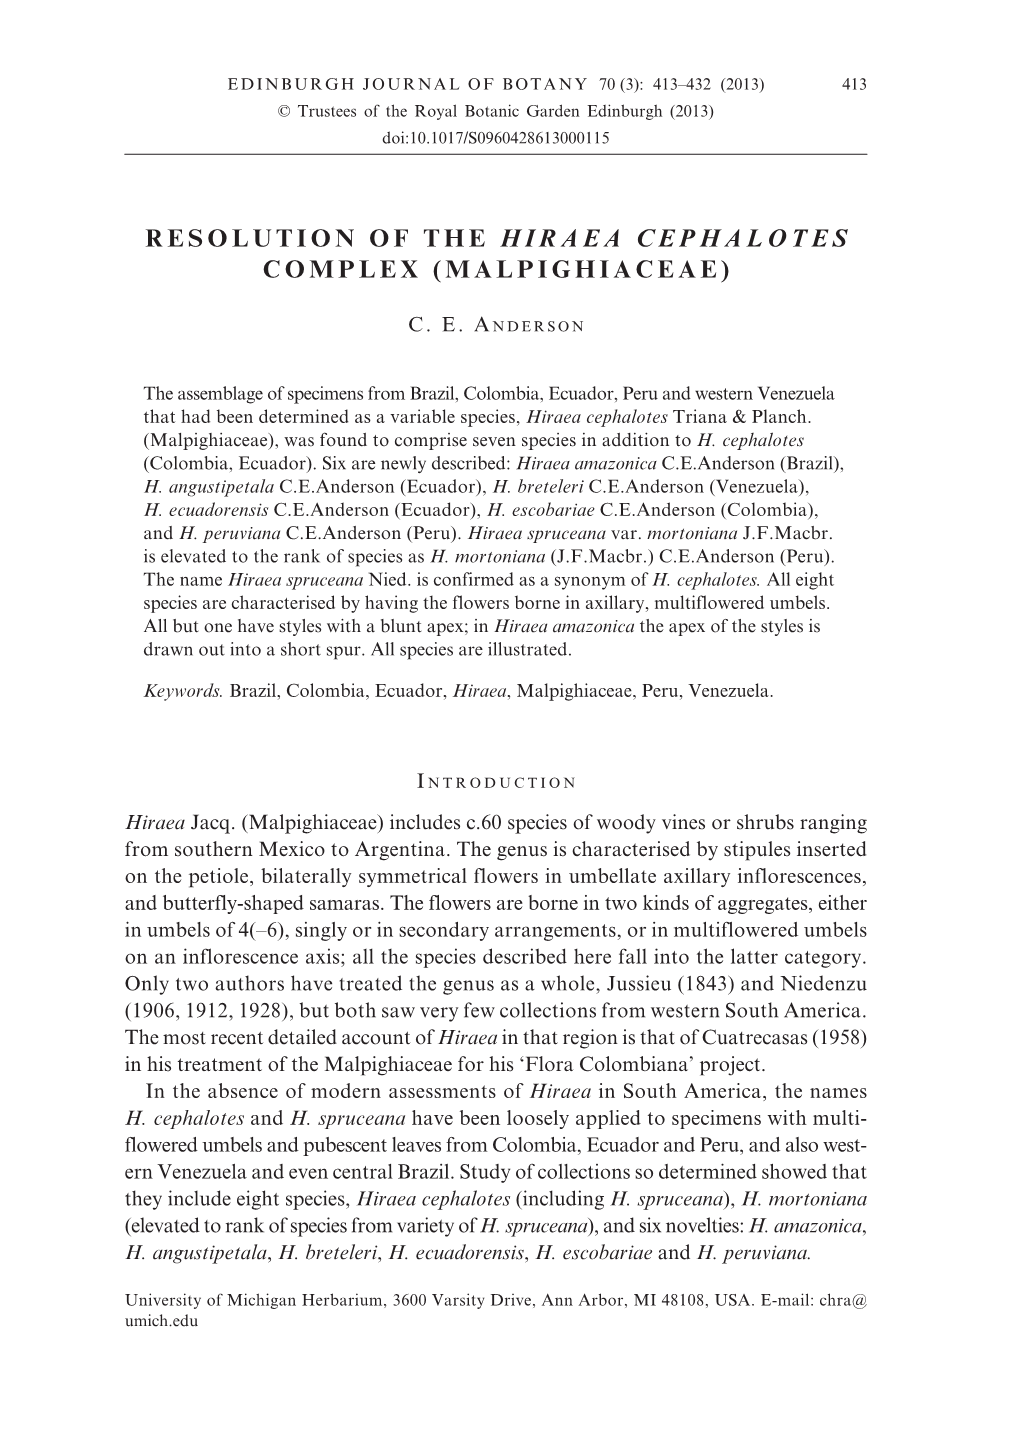 Resolution of the Hiraea Cephalotes Complex (Malpighiaceae)